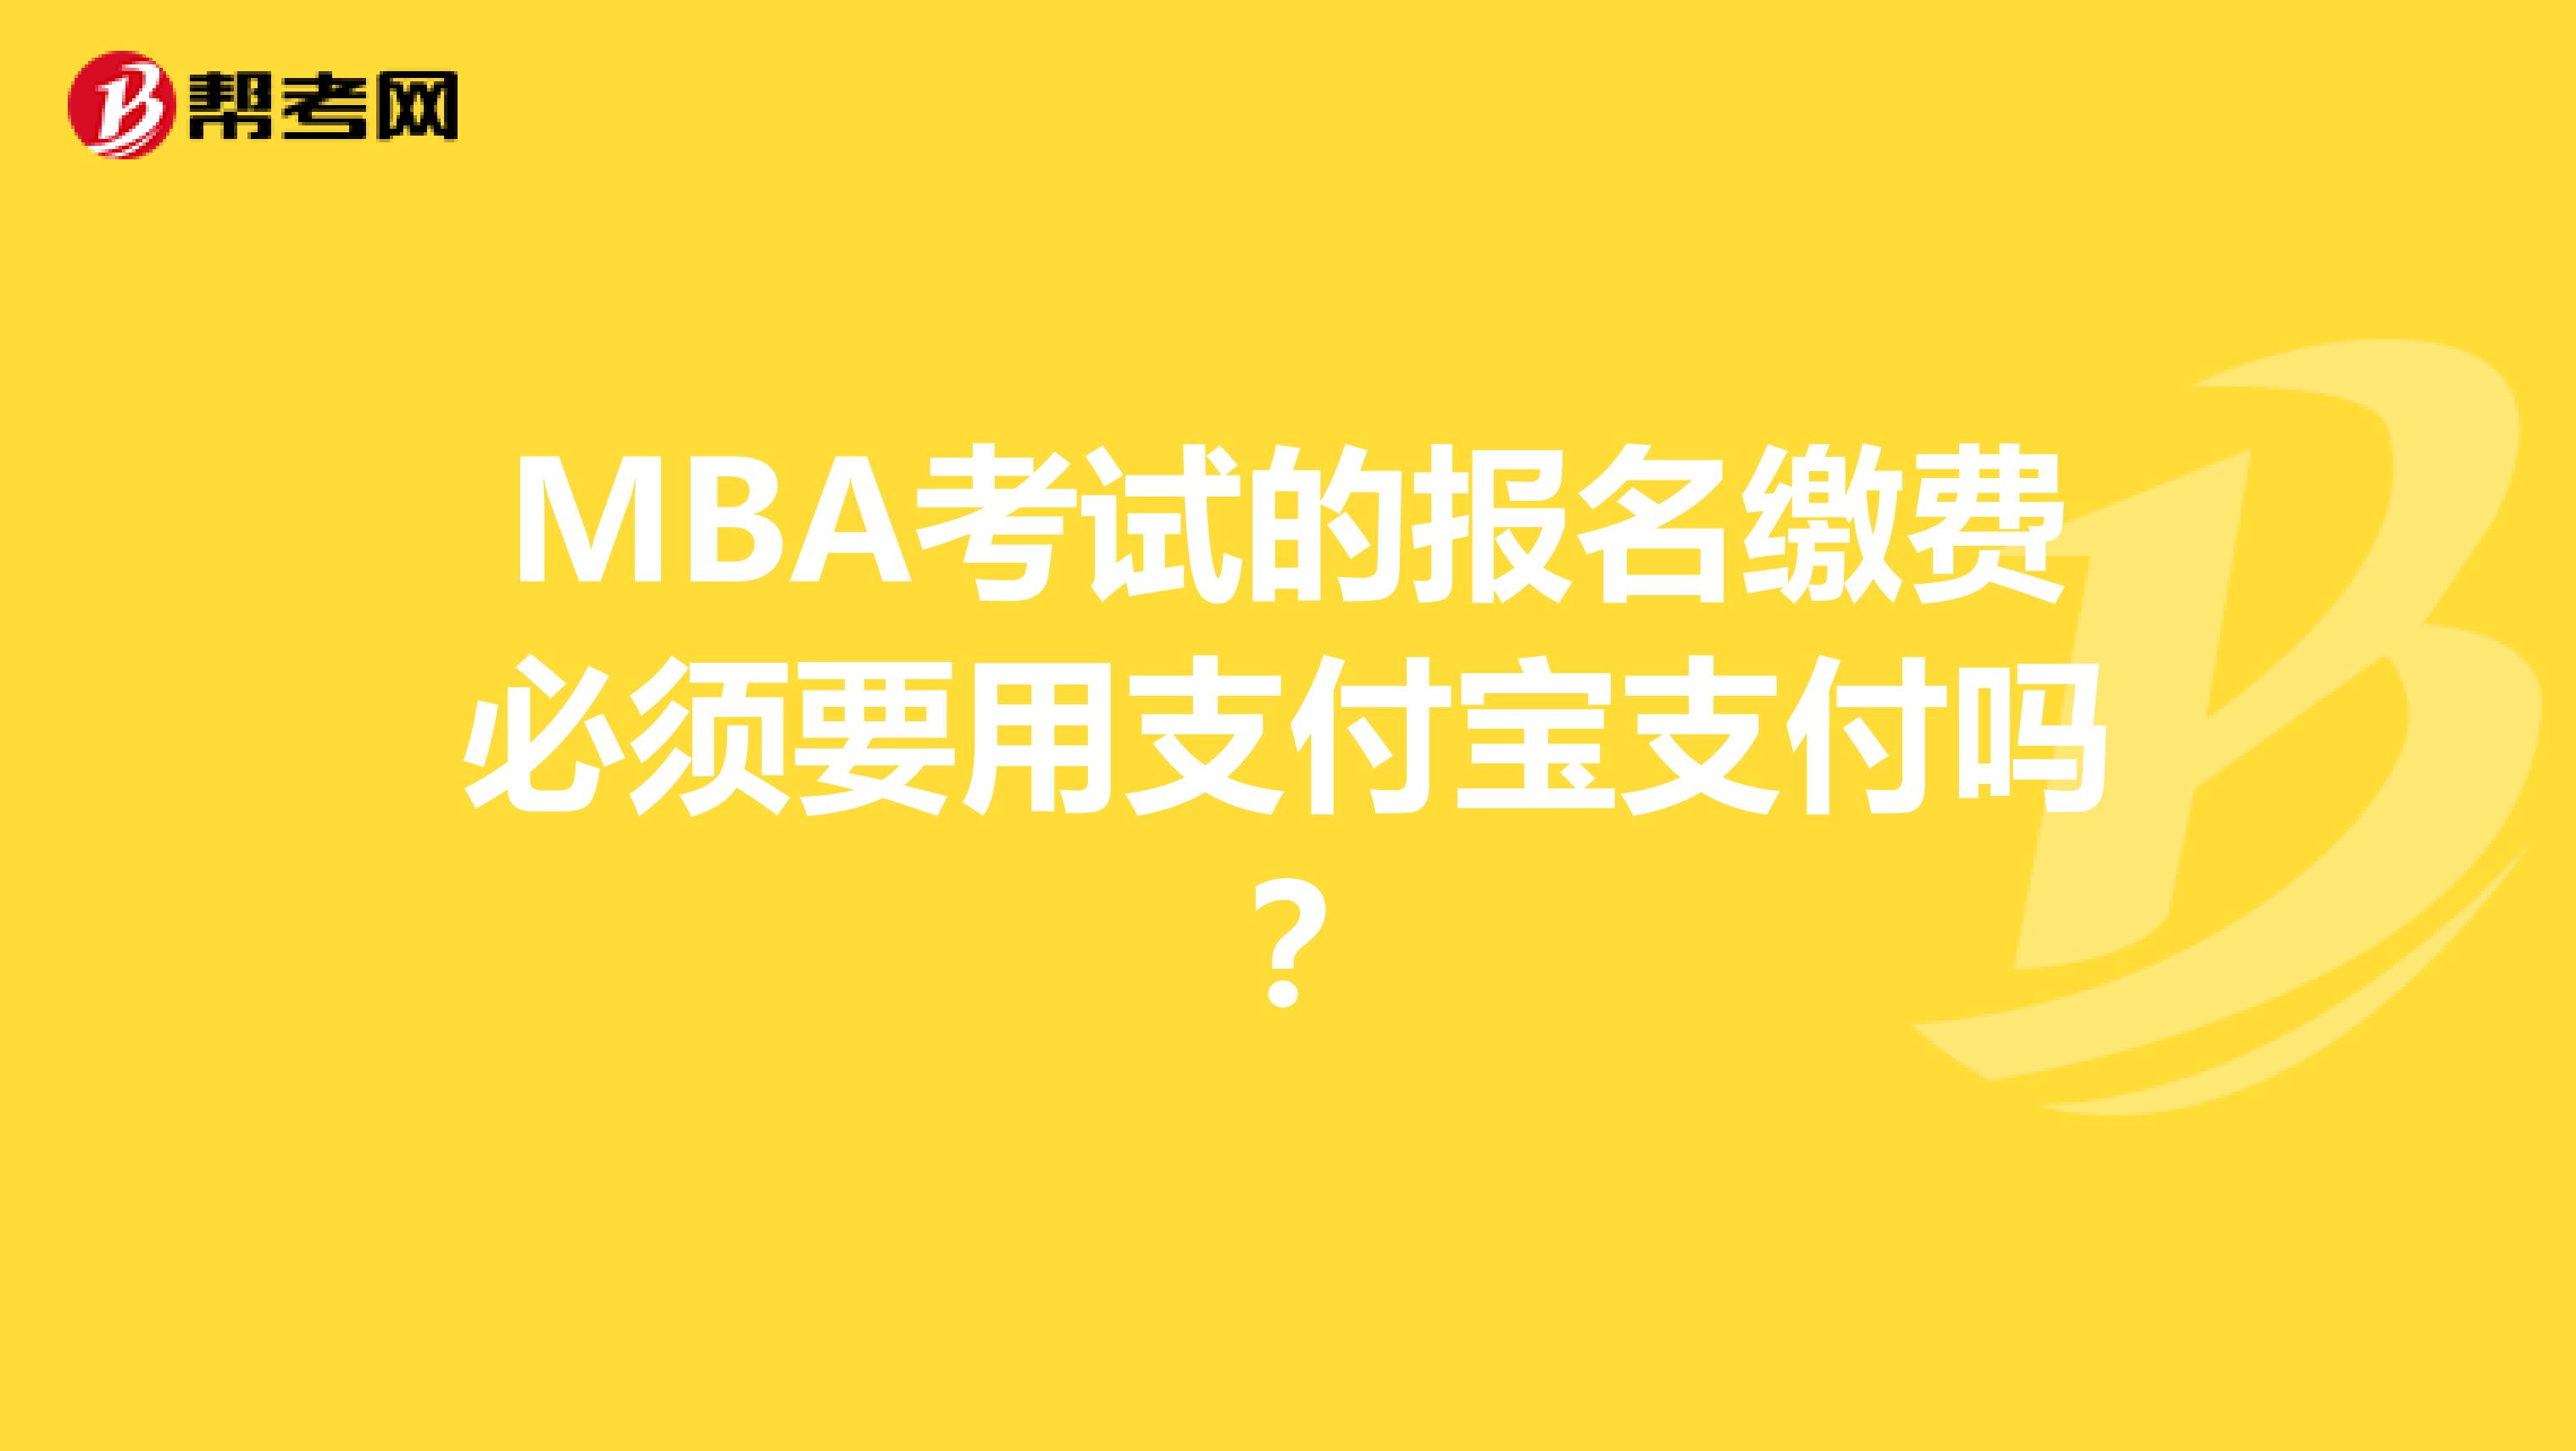 MBA考试的报名缴费必须要用支付宝支付吗？